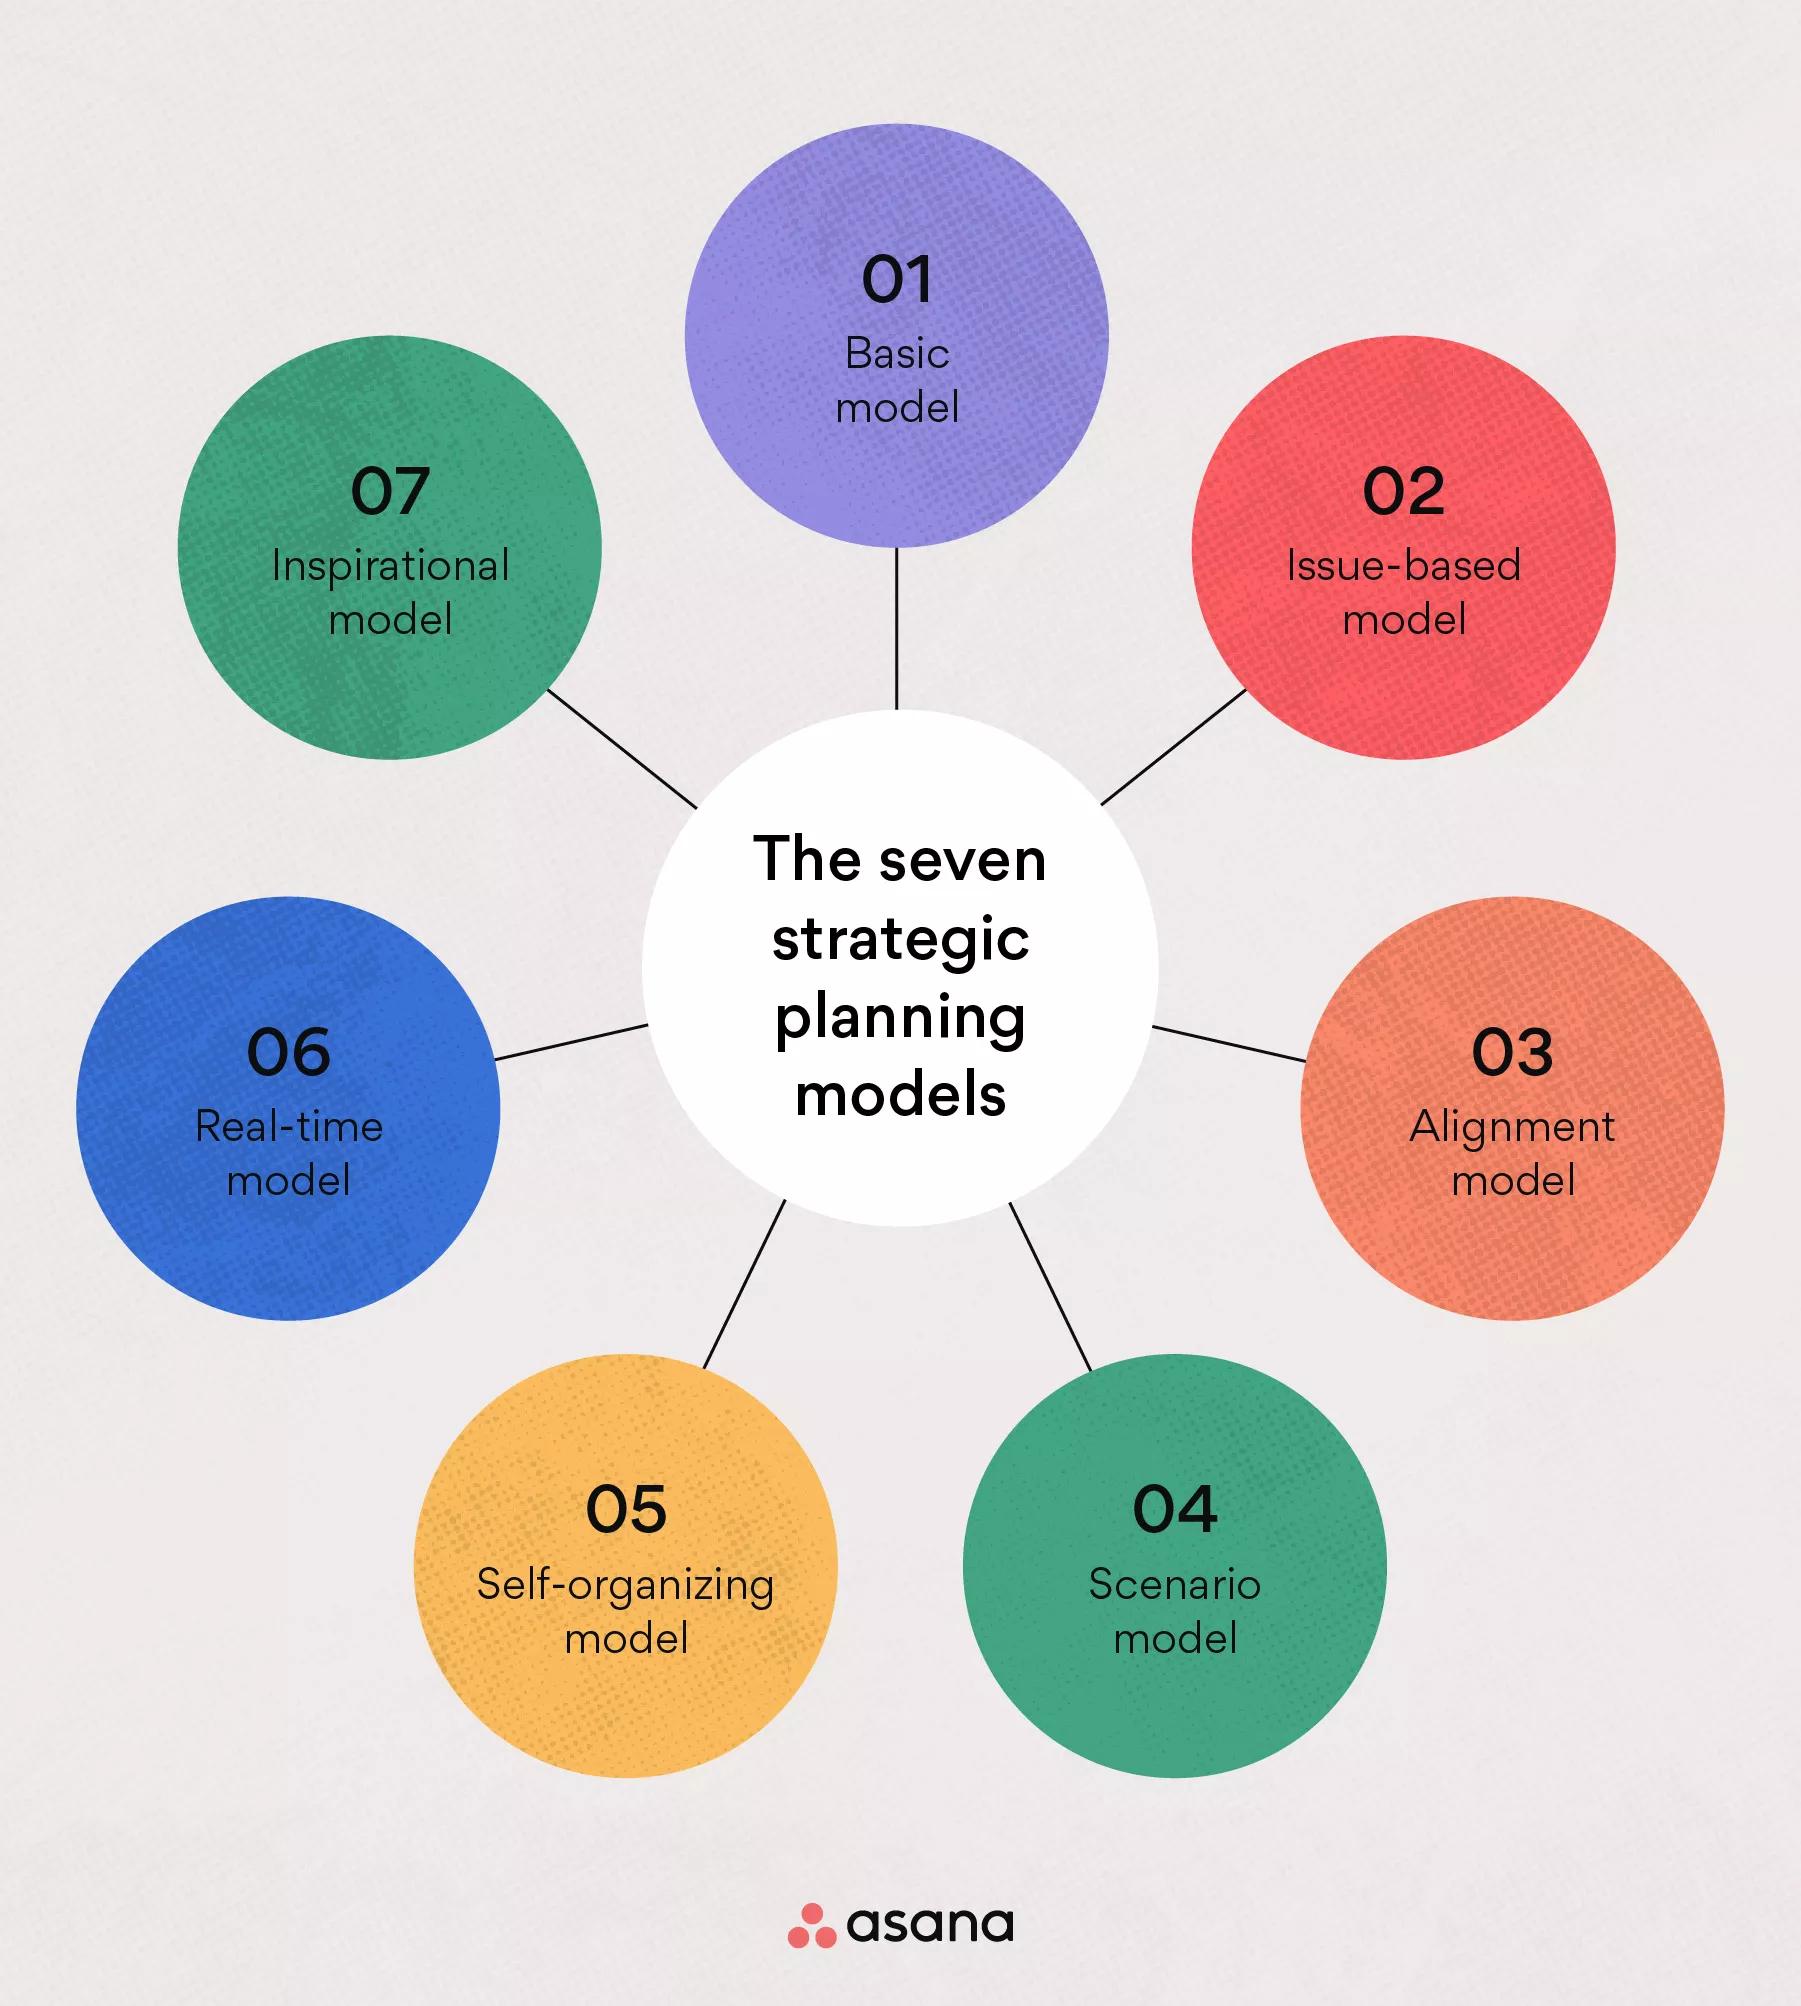 VRIO Analysis Framework for Strategic Planning